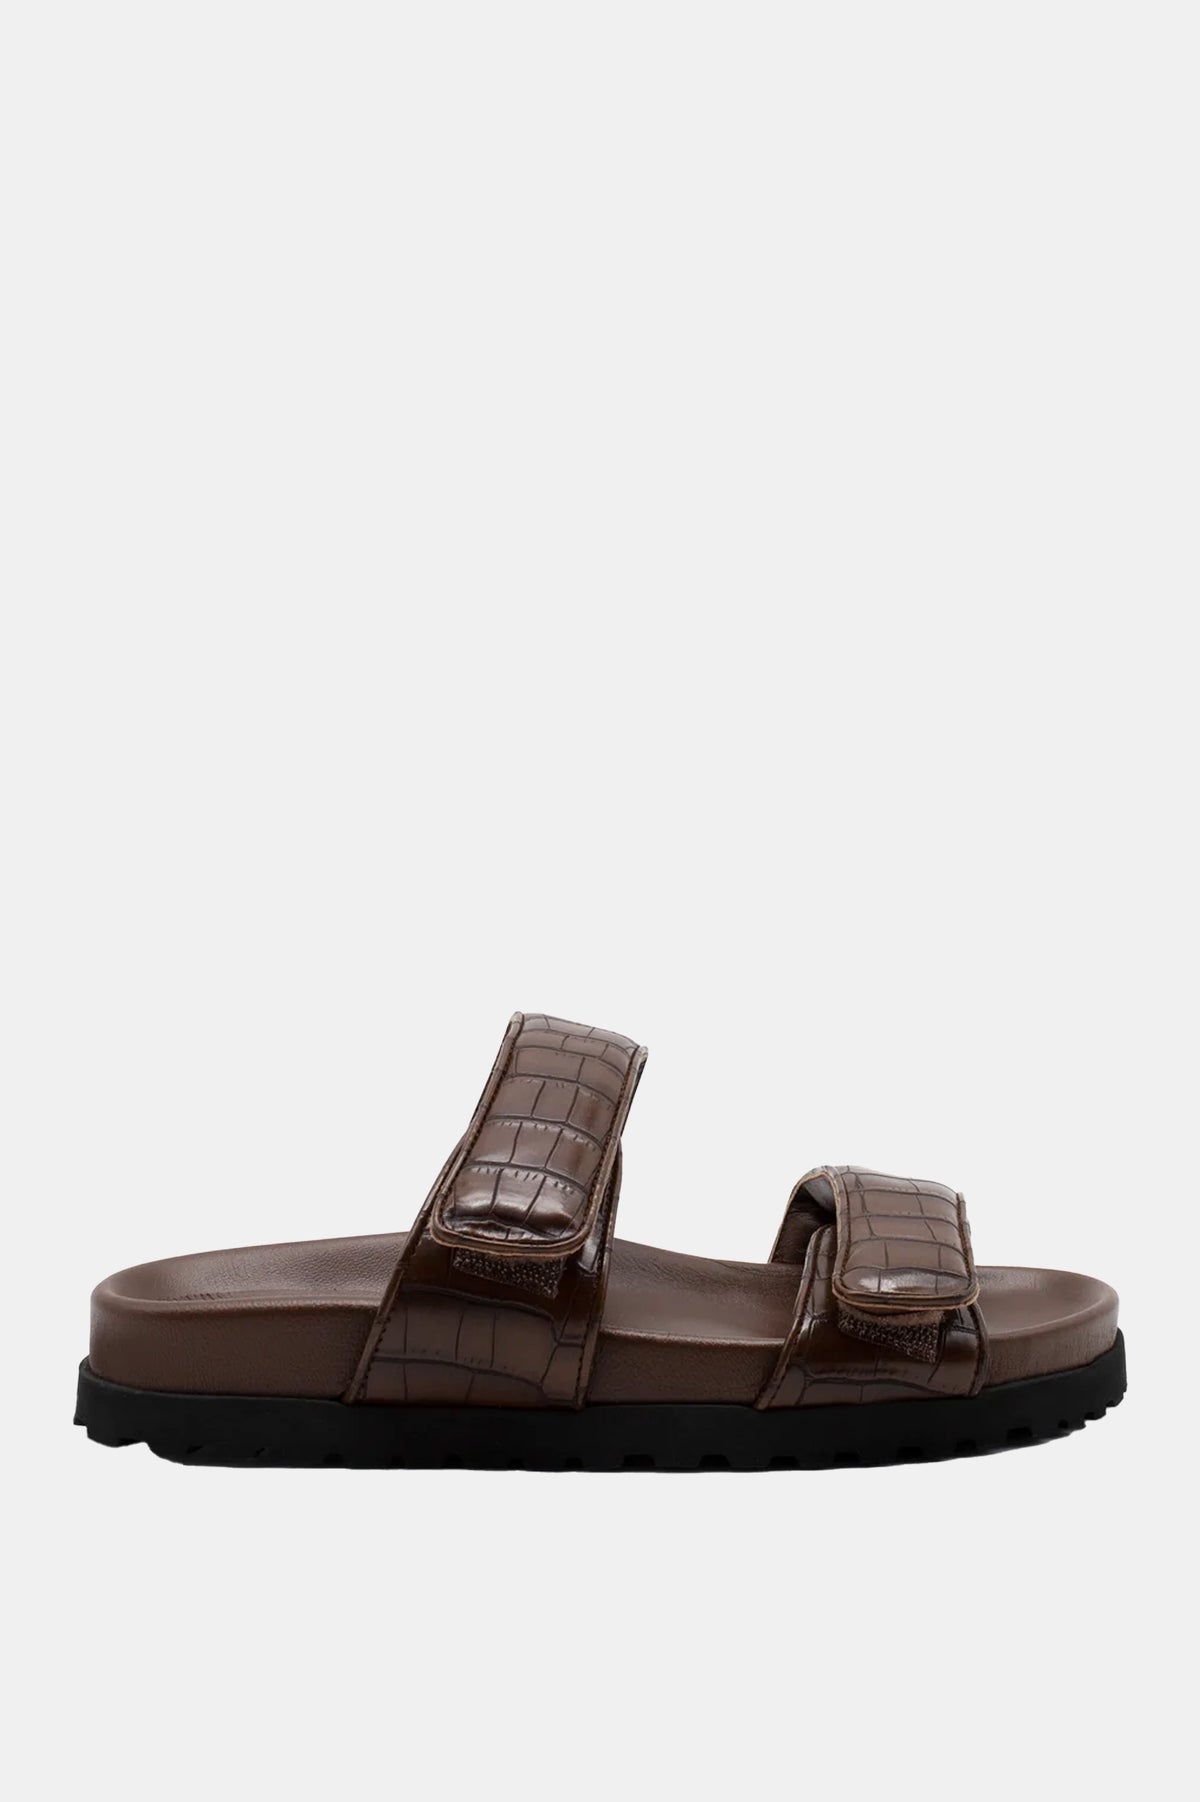 Perni 11 Croc Sandal in Chocolate